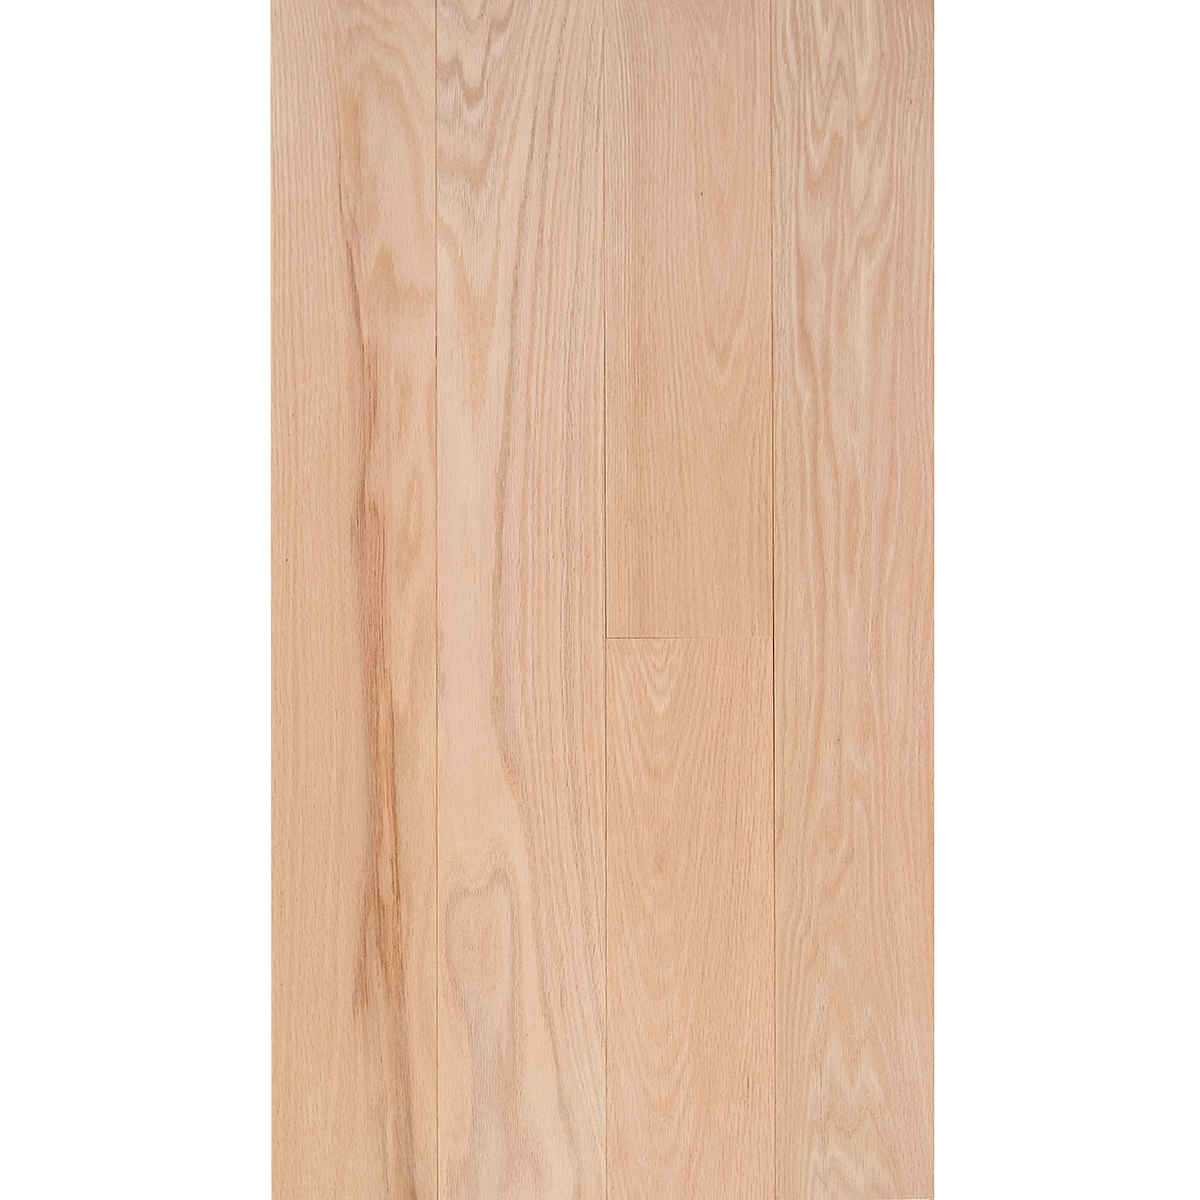 Red Oak 3 4 X 5 Select Grade Flooring, 3 4 X 5 Hardwood Flooring